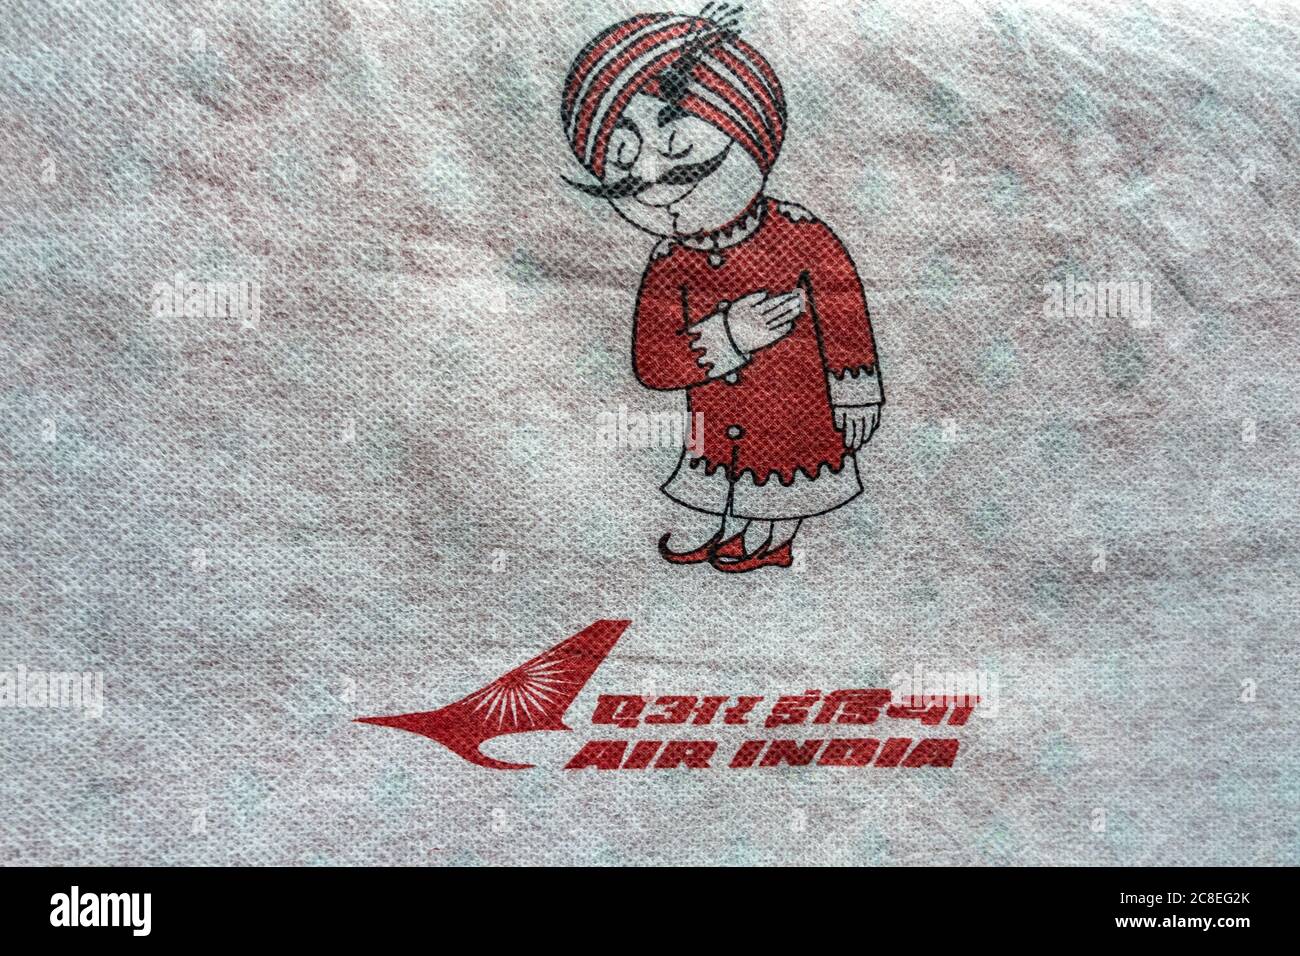 MUMBAI AIRPORT, INDIA JANUARY 01, 2019: Close up view on napkins with logo of a civilian flight company - Air India Stock Photo